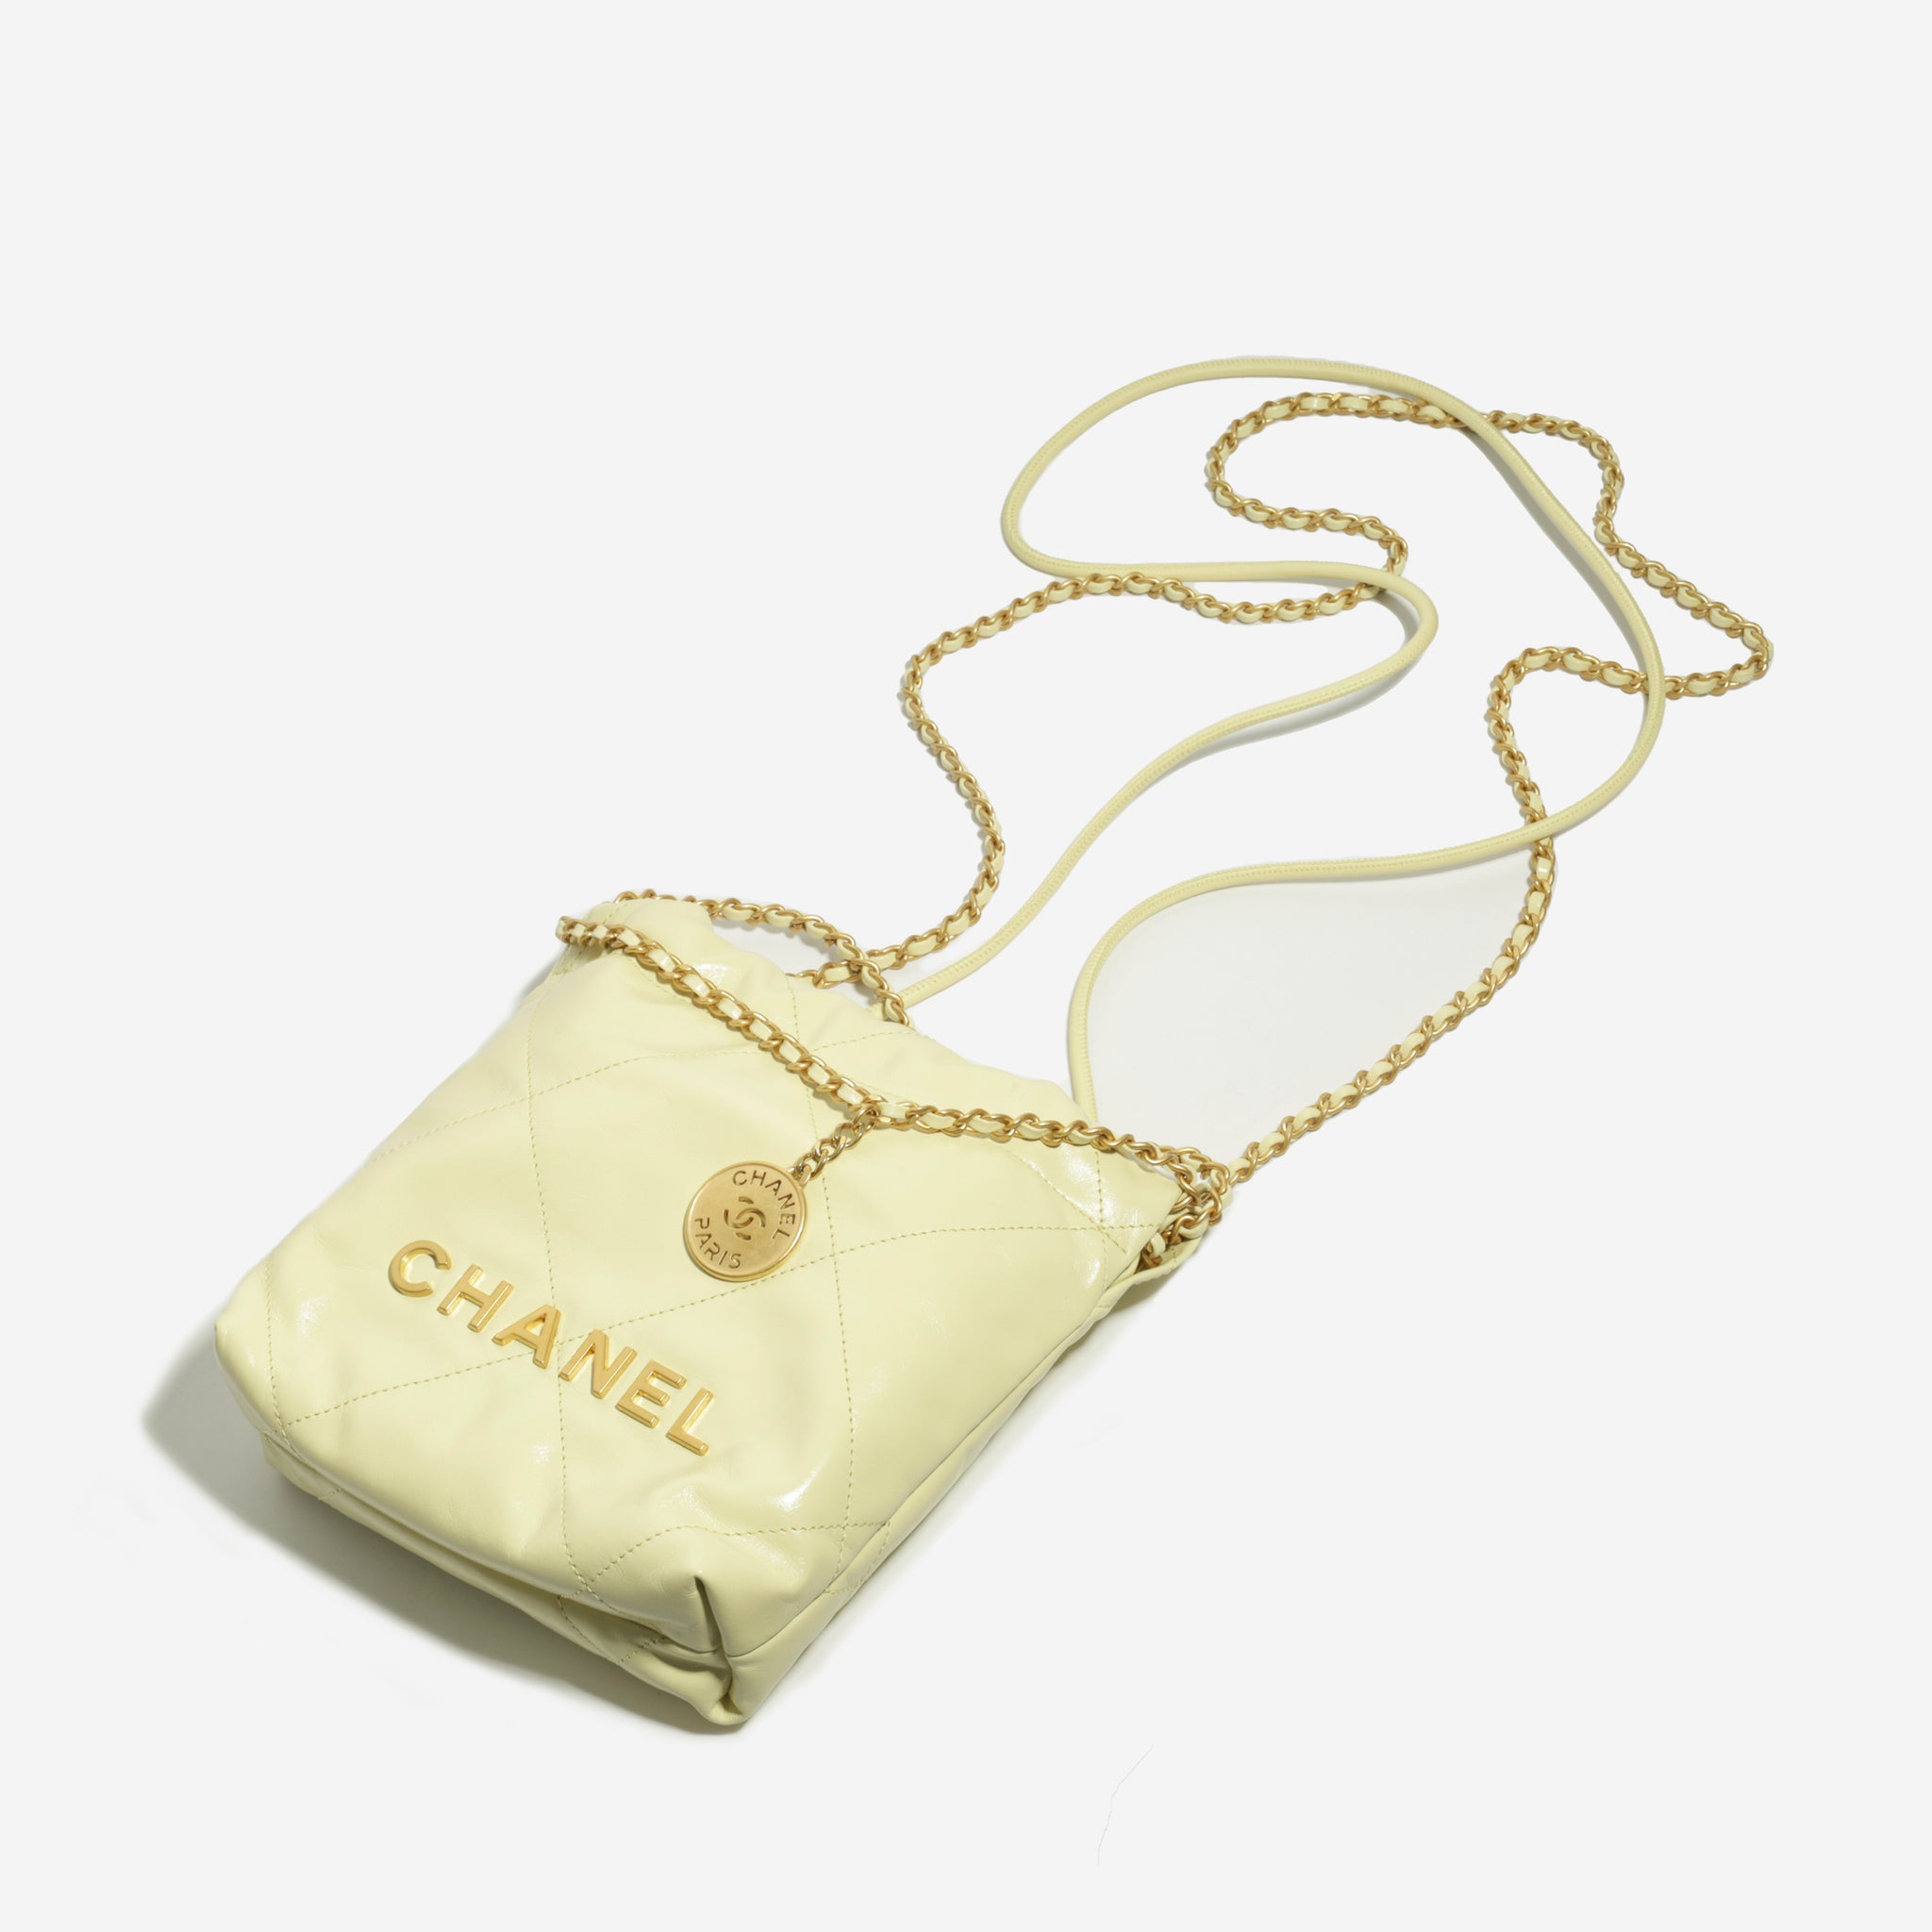 Chanel - 22 Mini Handbag - Light Yellow Shiny Crumpled Calfskin - GHW - 2023